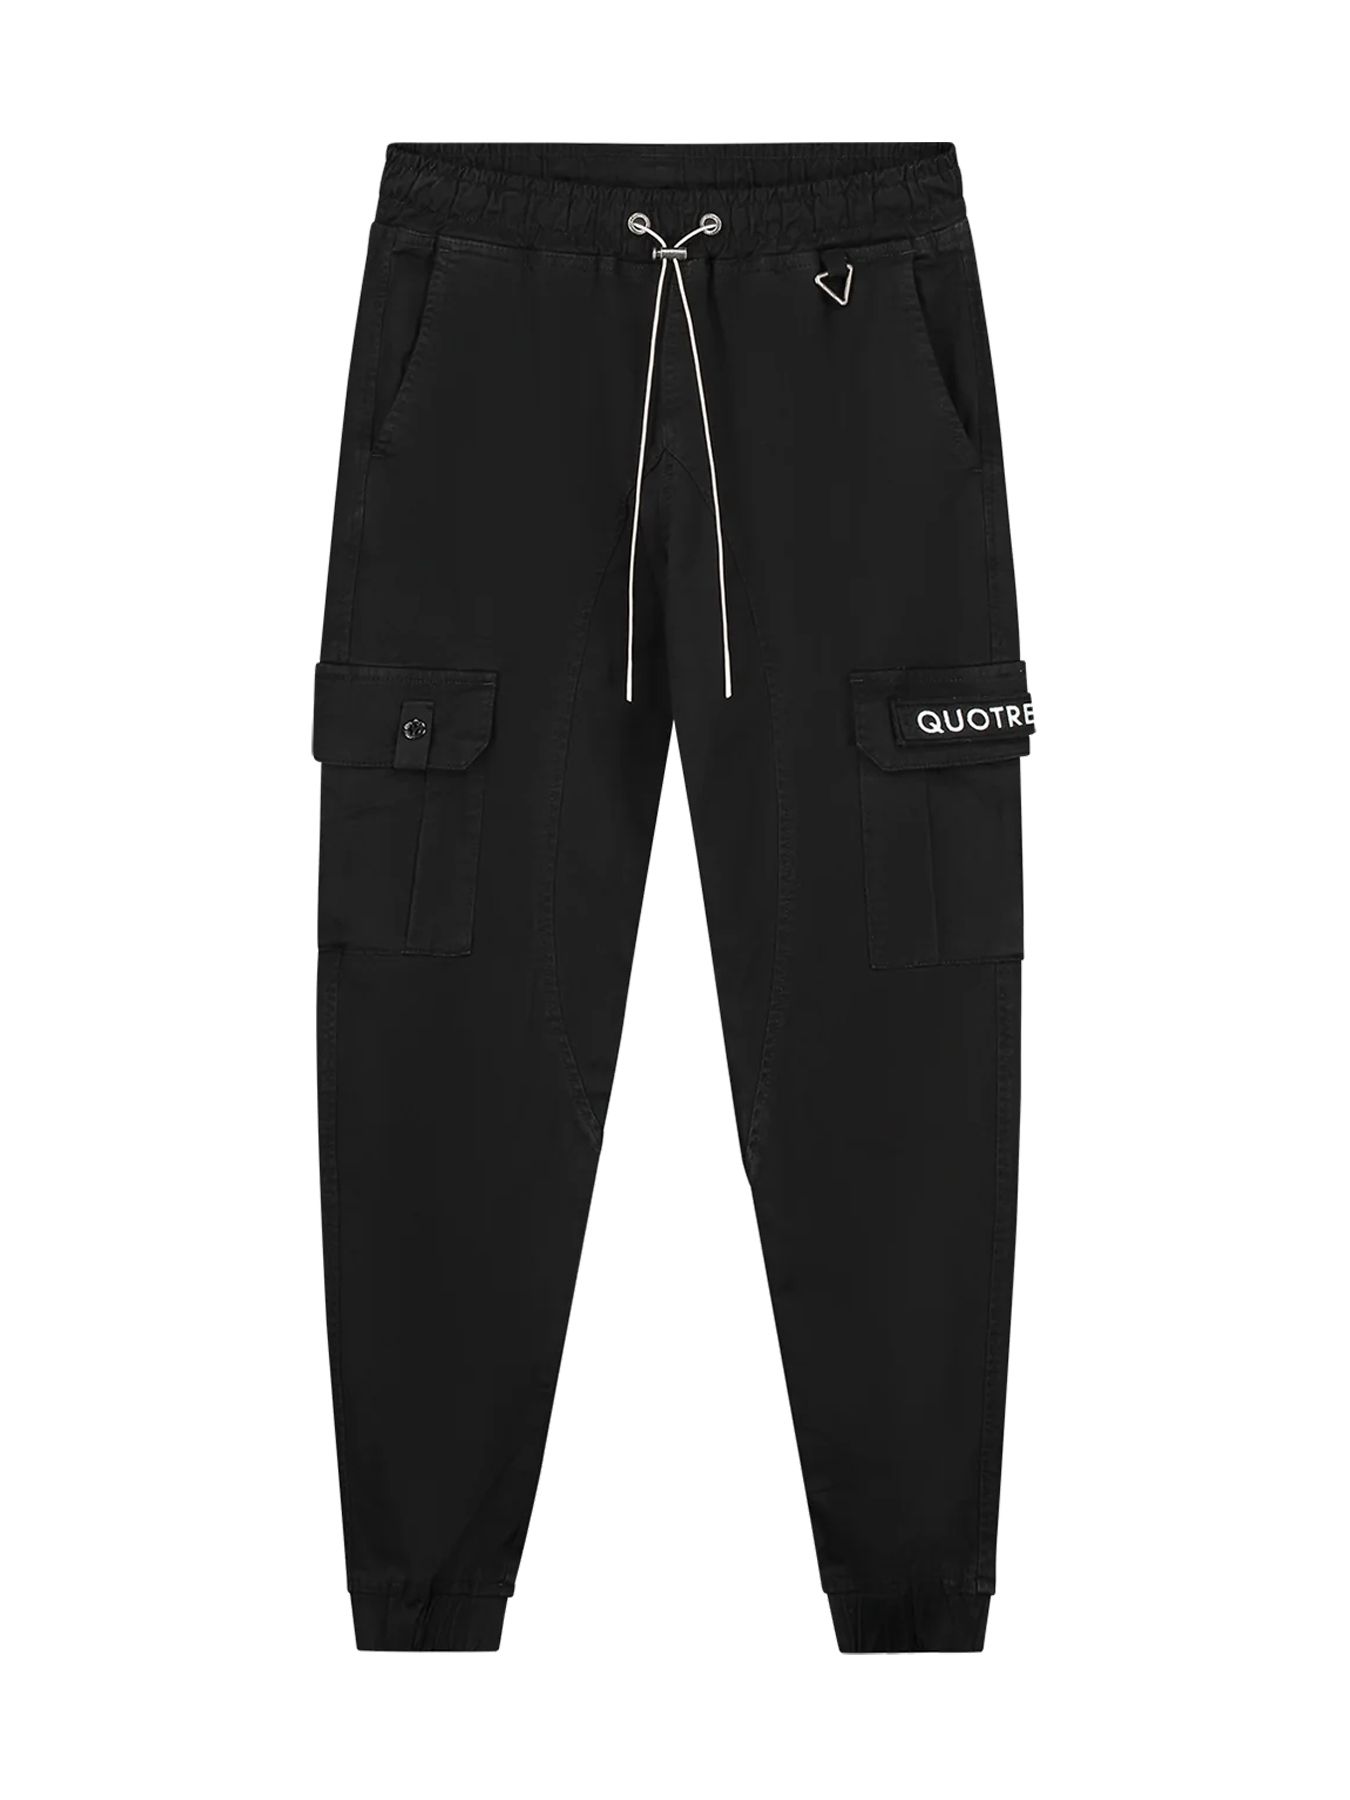 Quotrell Brockton cargo pants Black/White 00106008-904